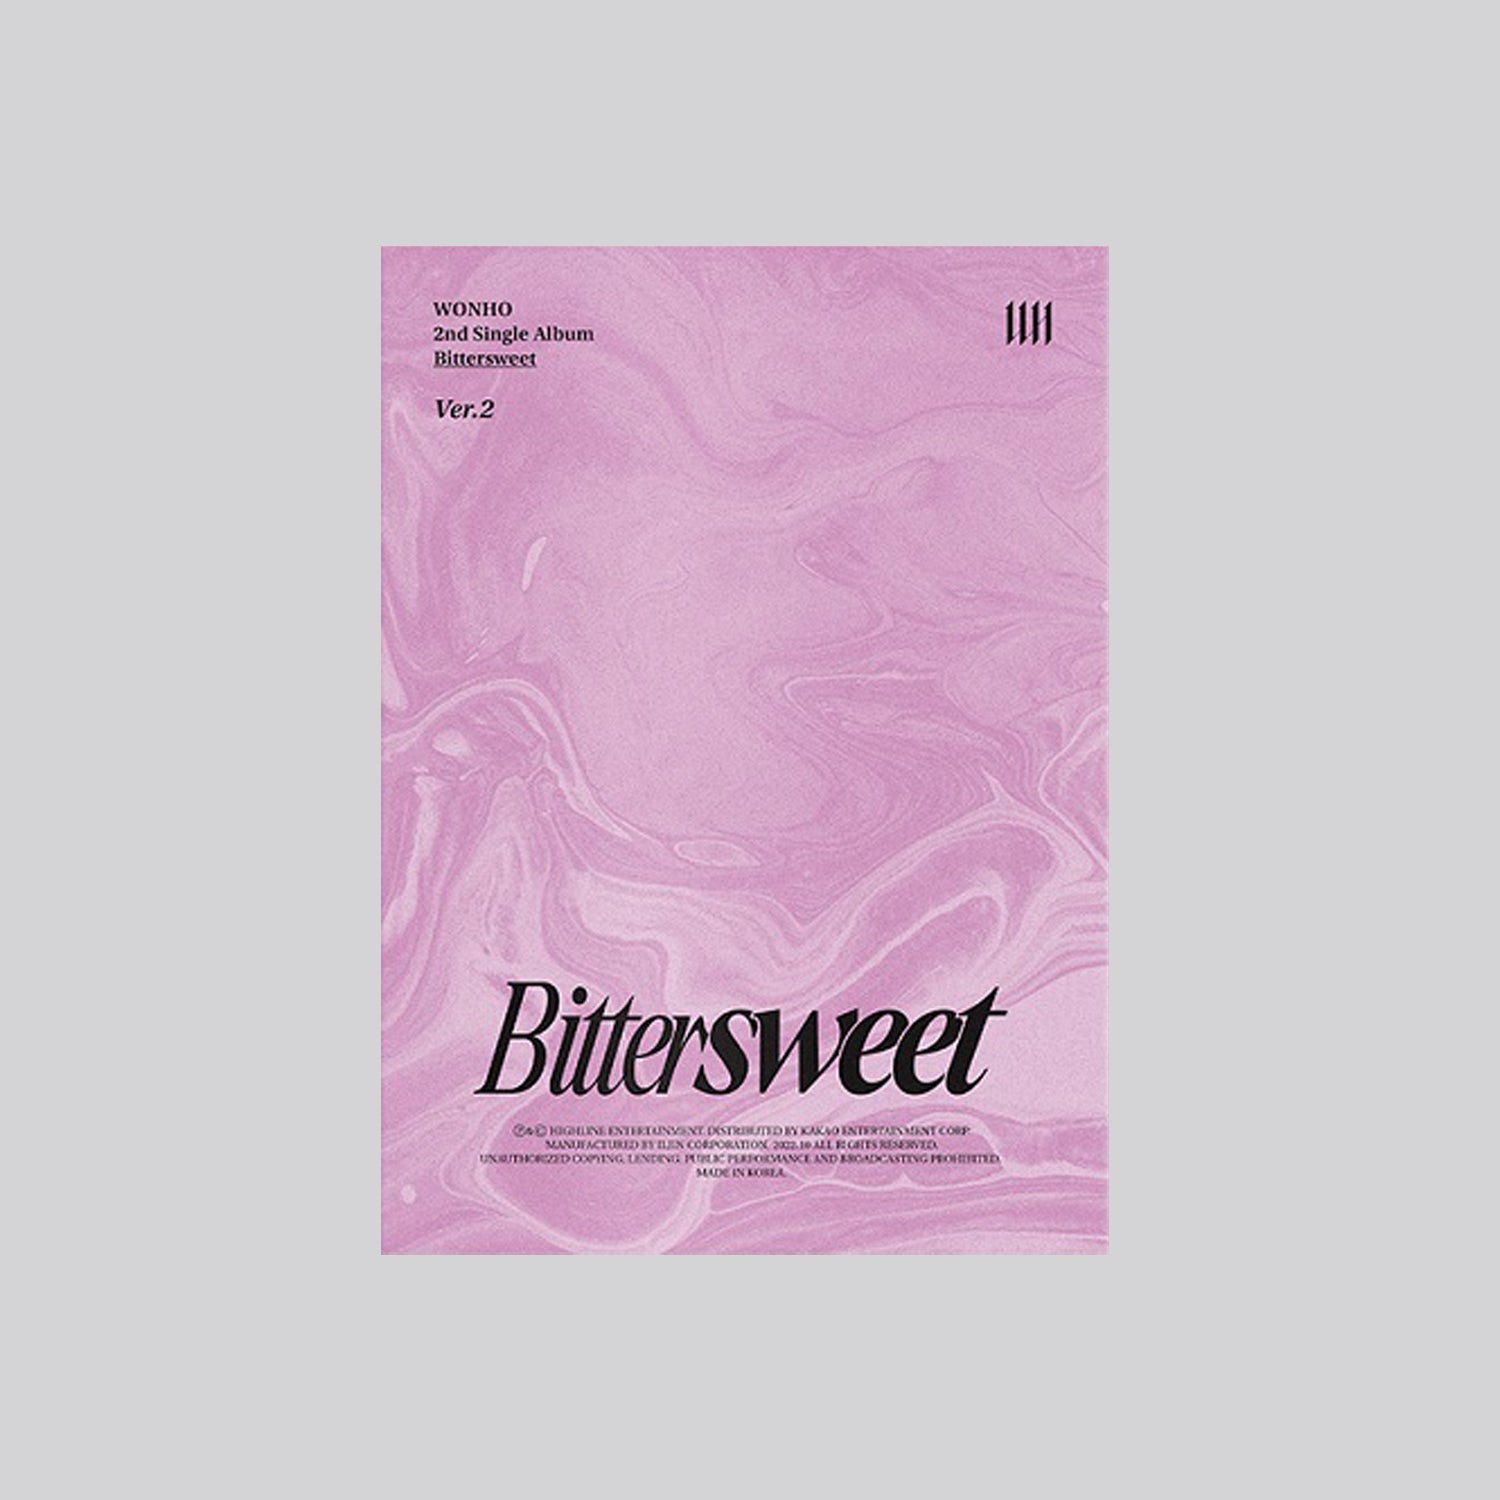 WONHO 2ND SINGLE ALBUM 'BITTERSWEET' VER.2 COVER